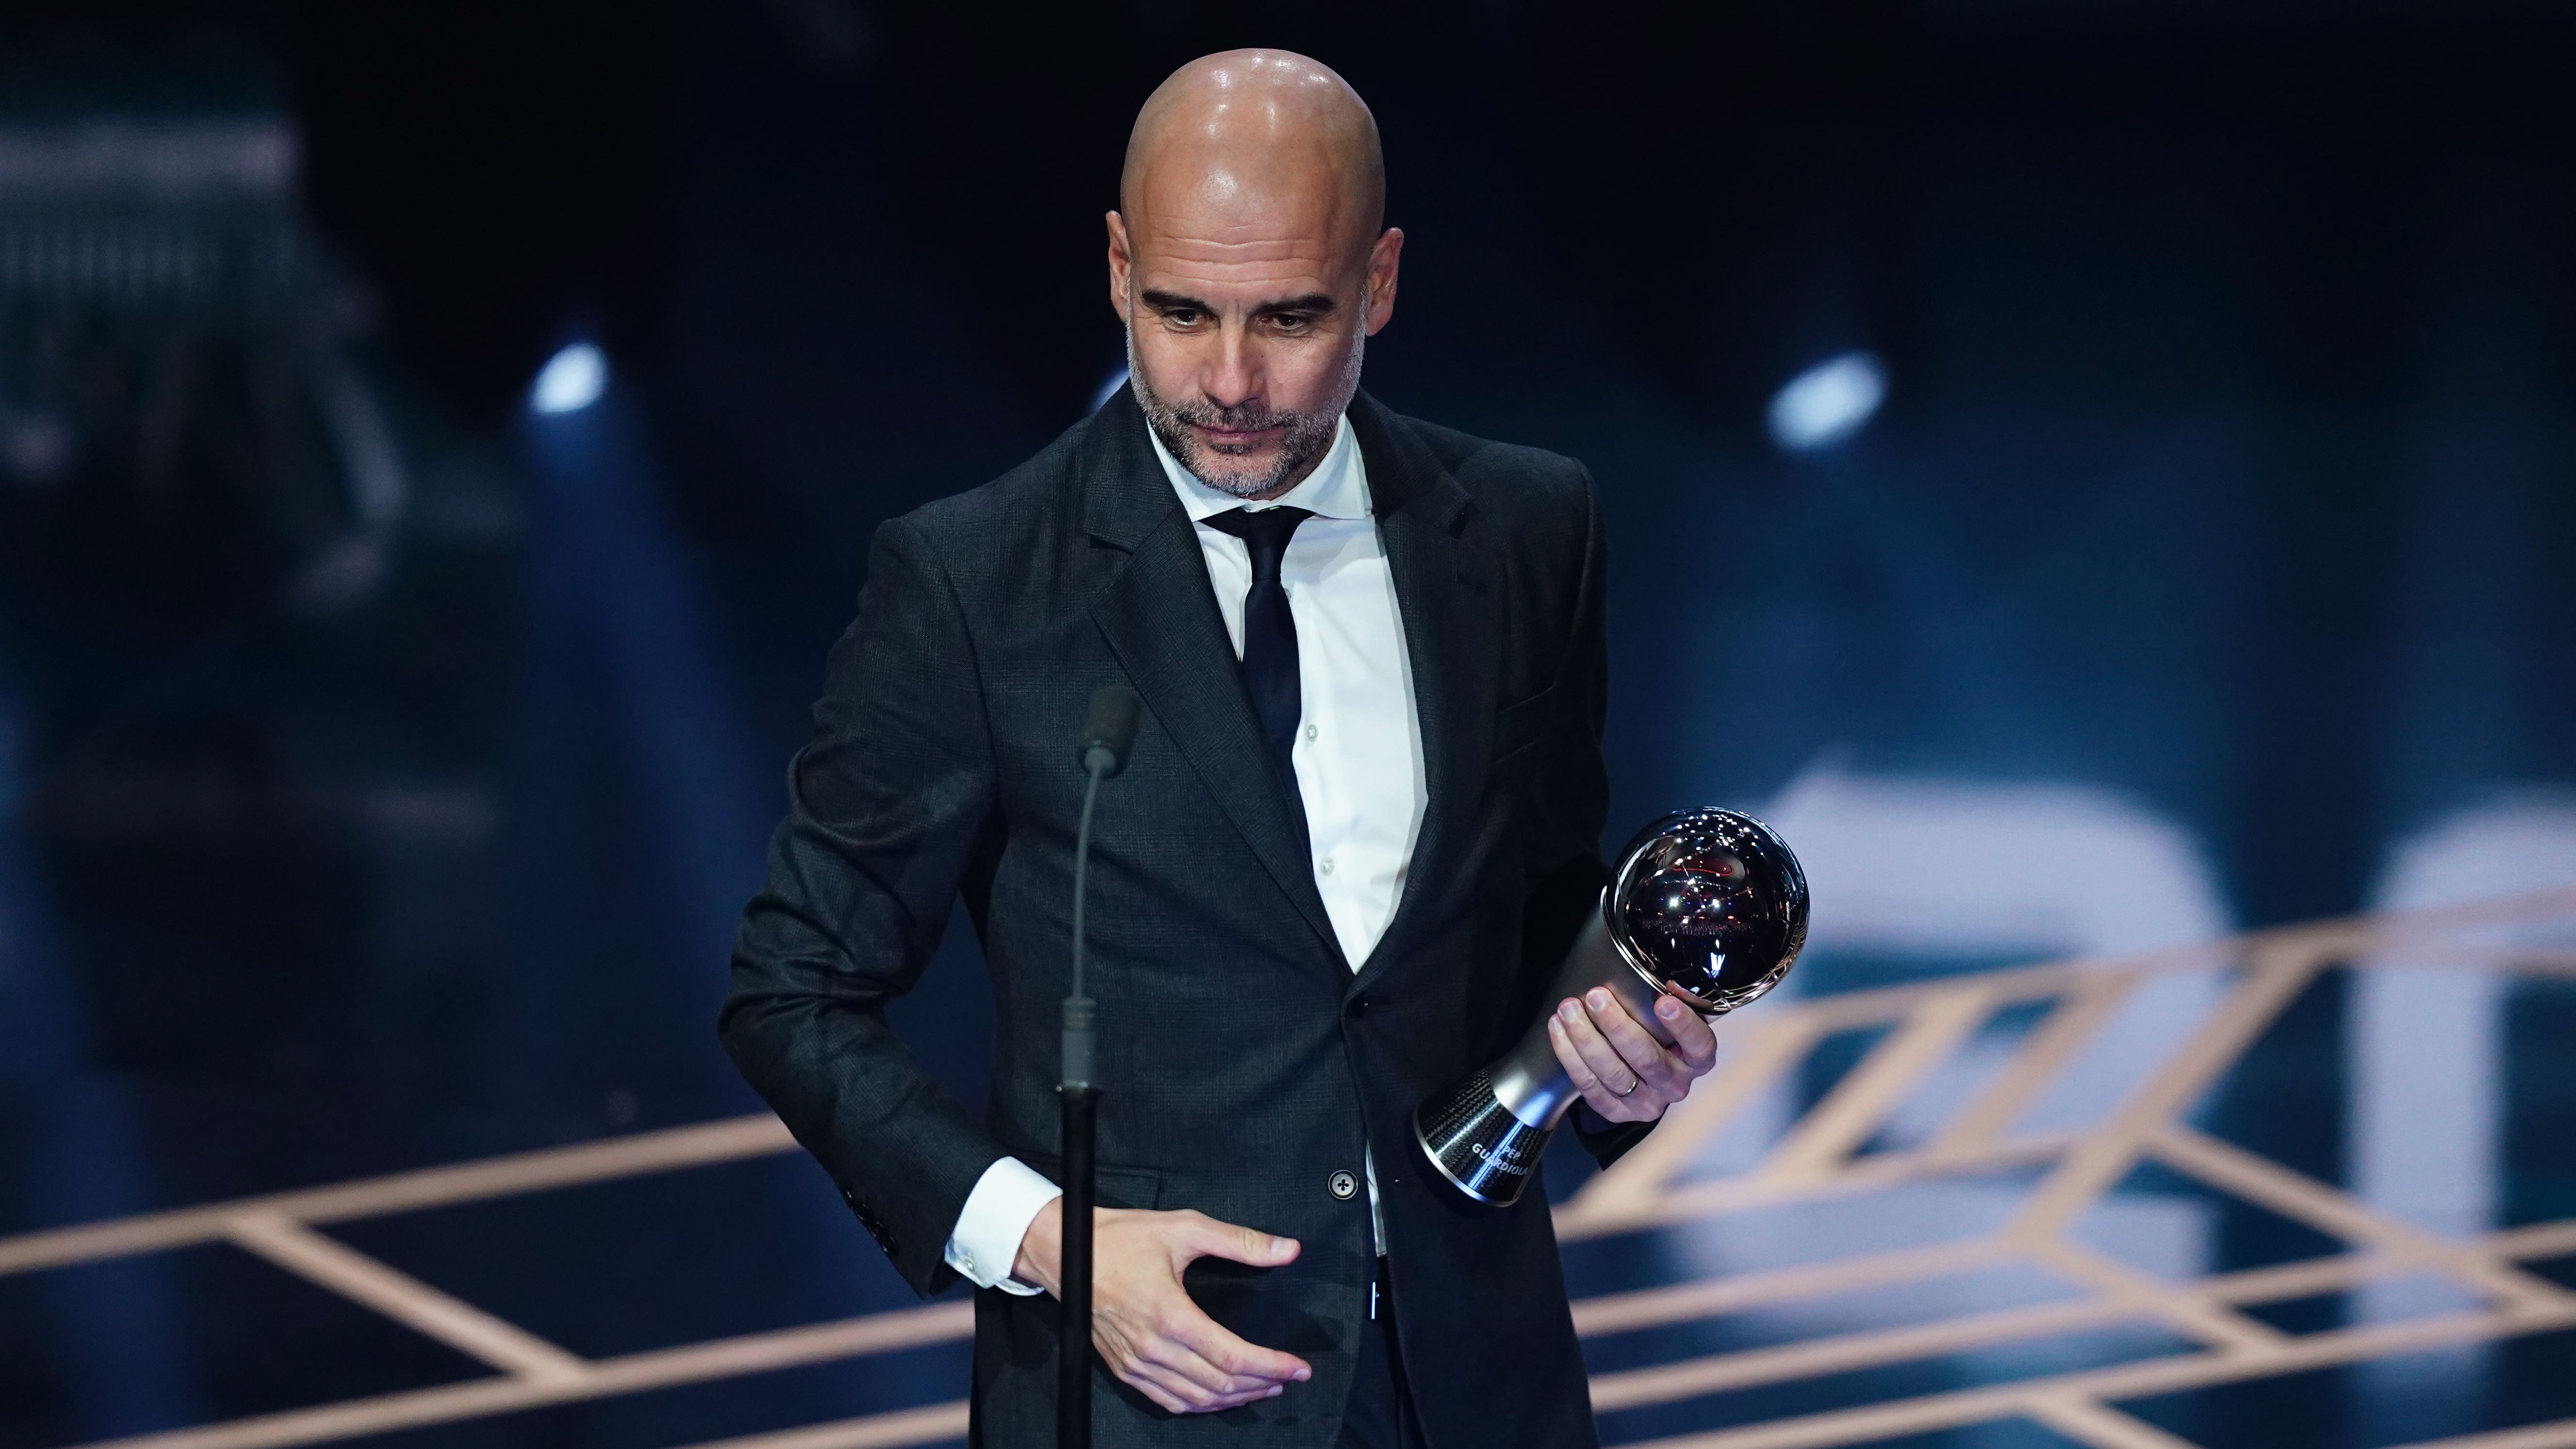 Manchester City boss Pep Guardiola named best men’s coach at FIFA awards